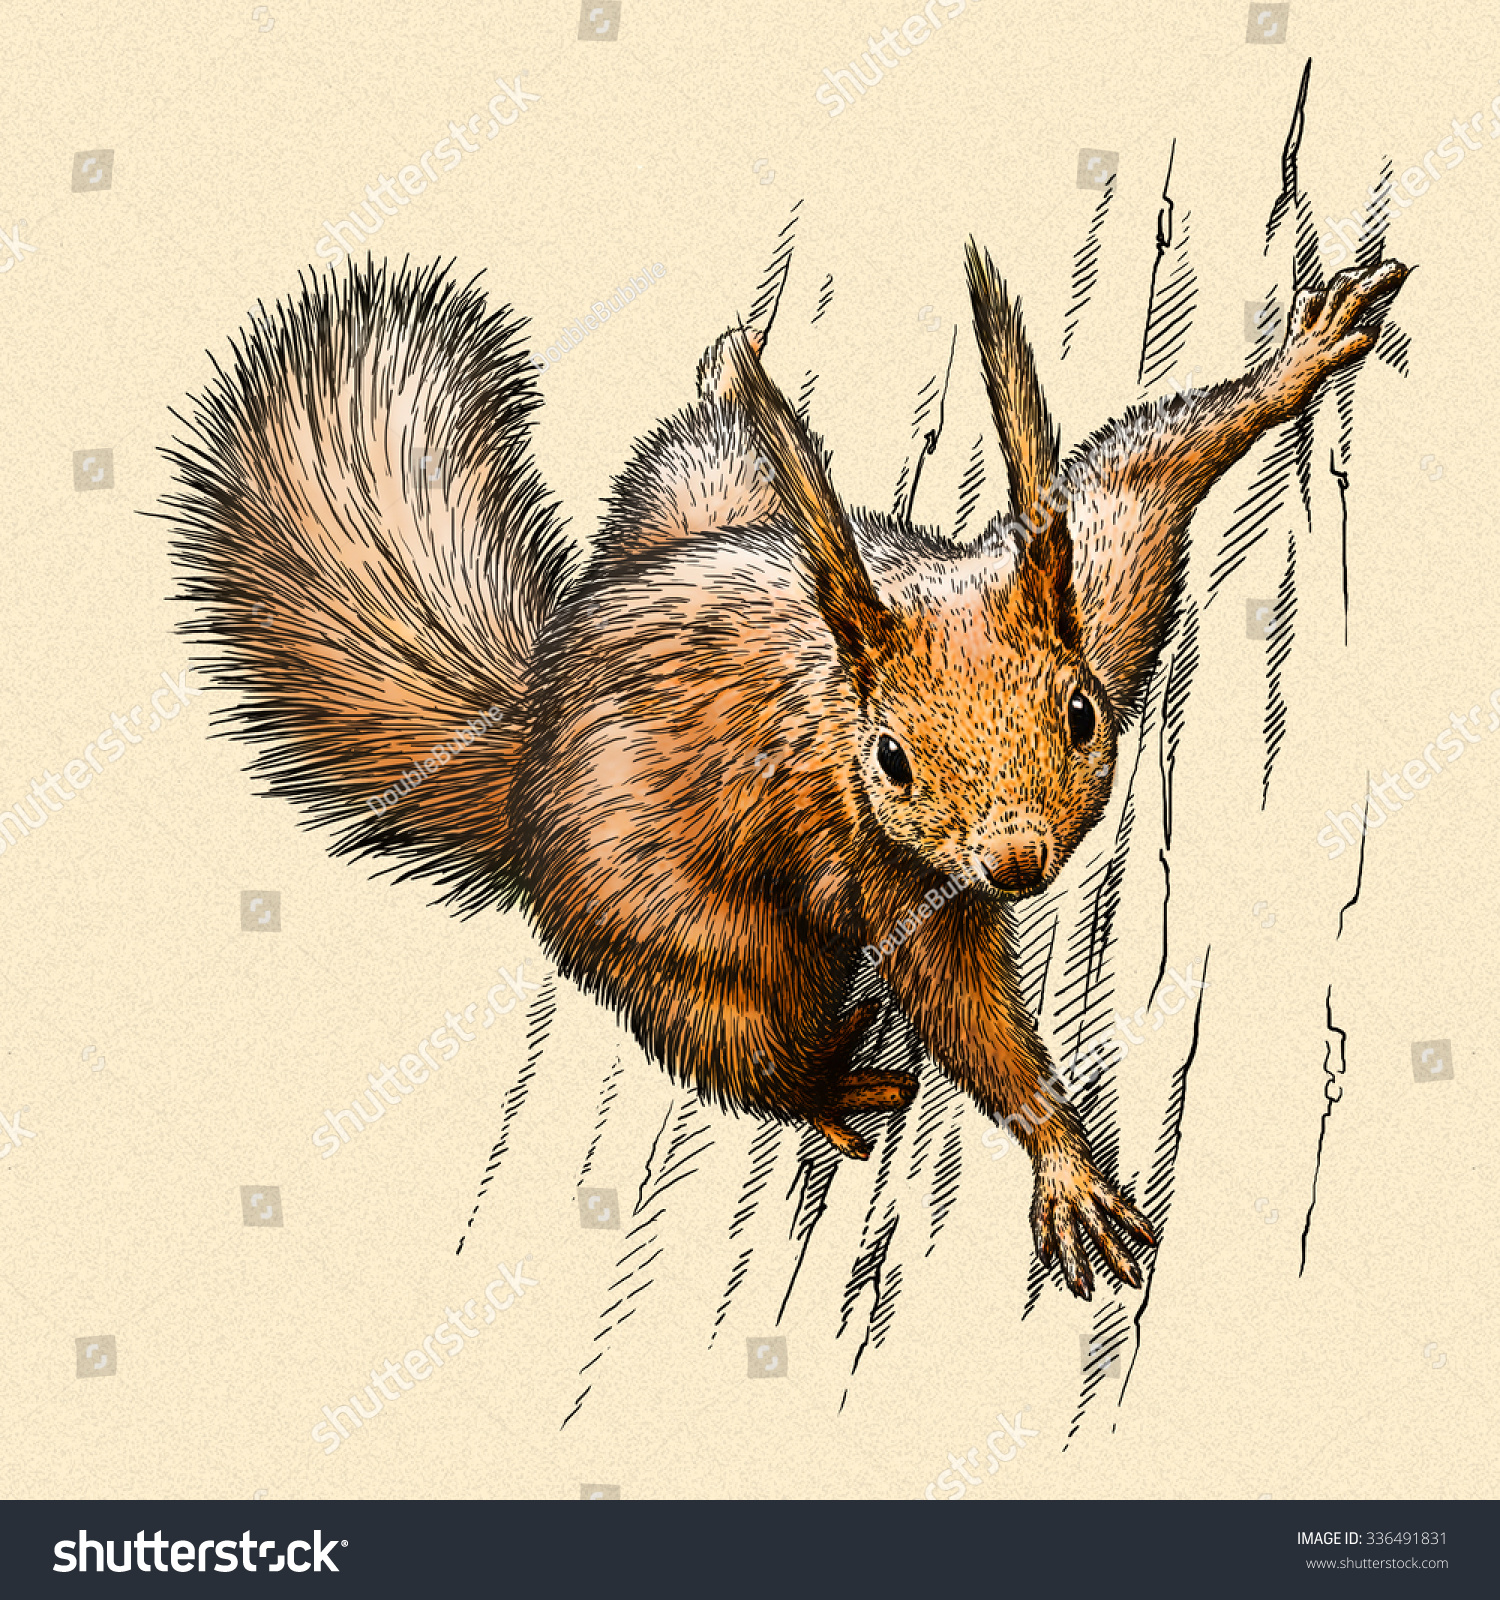 Engrave Squirrel Illustration Stock Illustration 336491831 ...